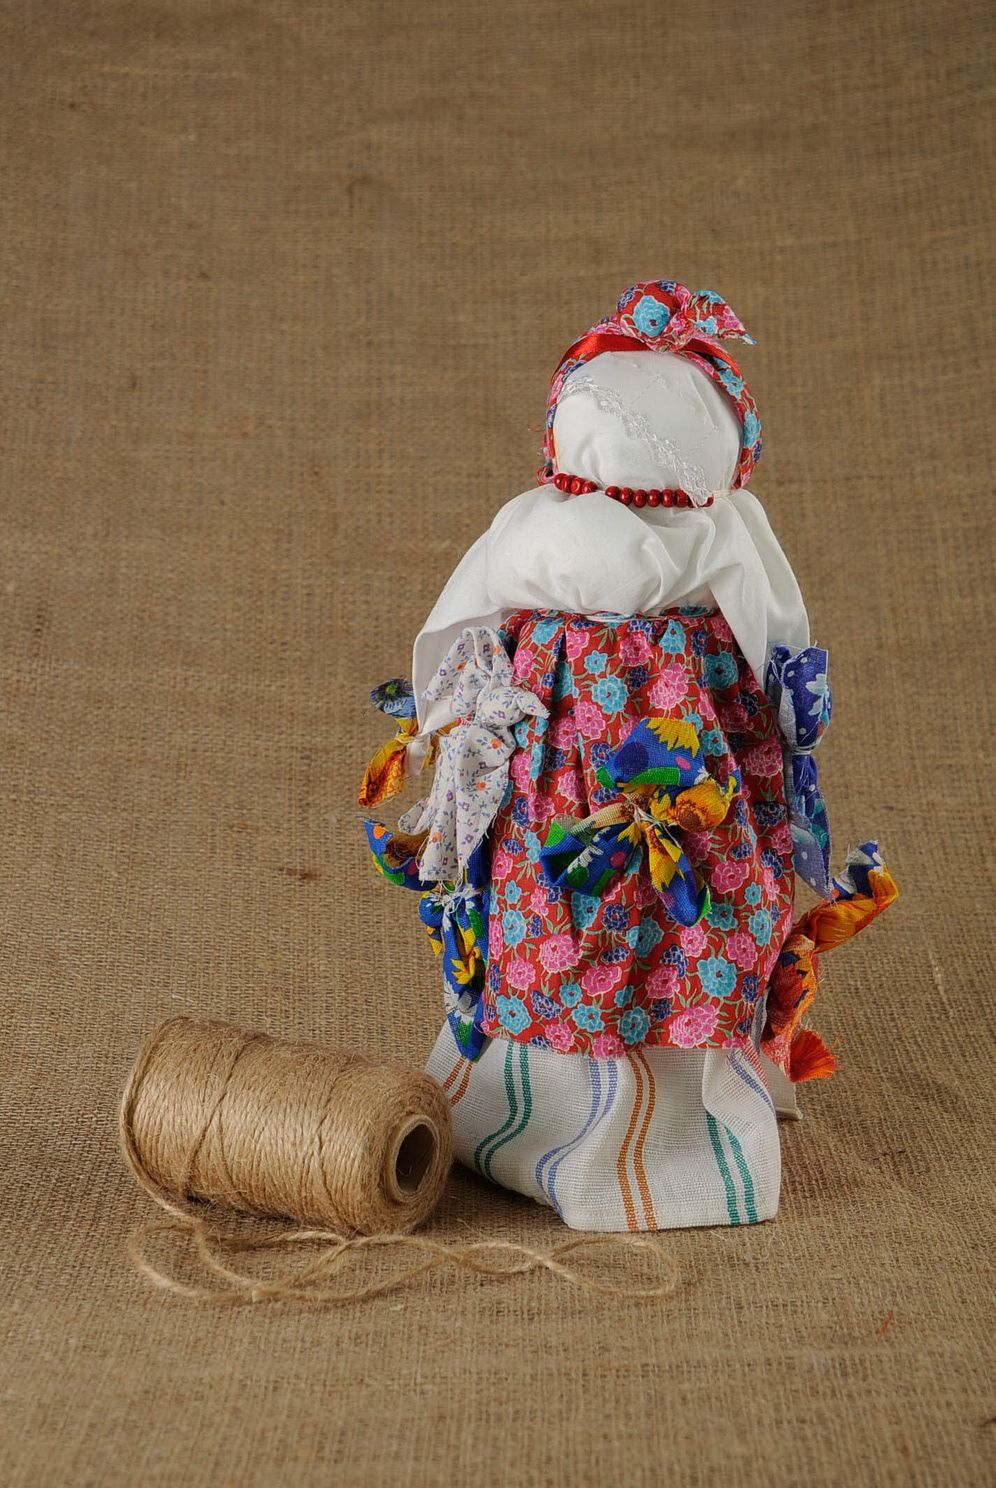 Motanka-poupée ethnique en tissu Oiseau faite main photo 1